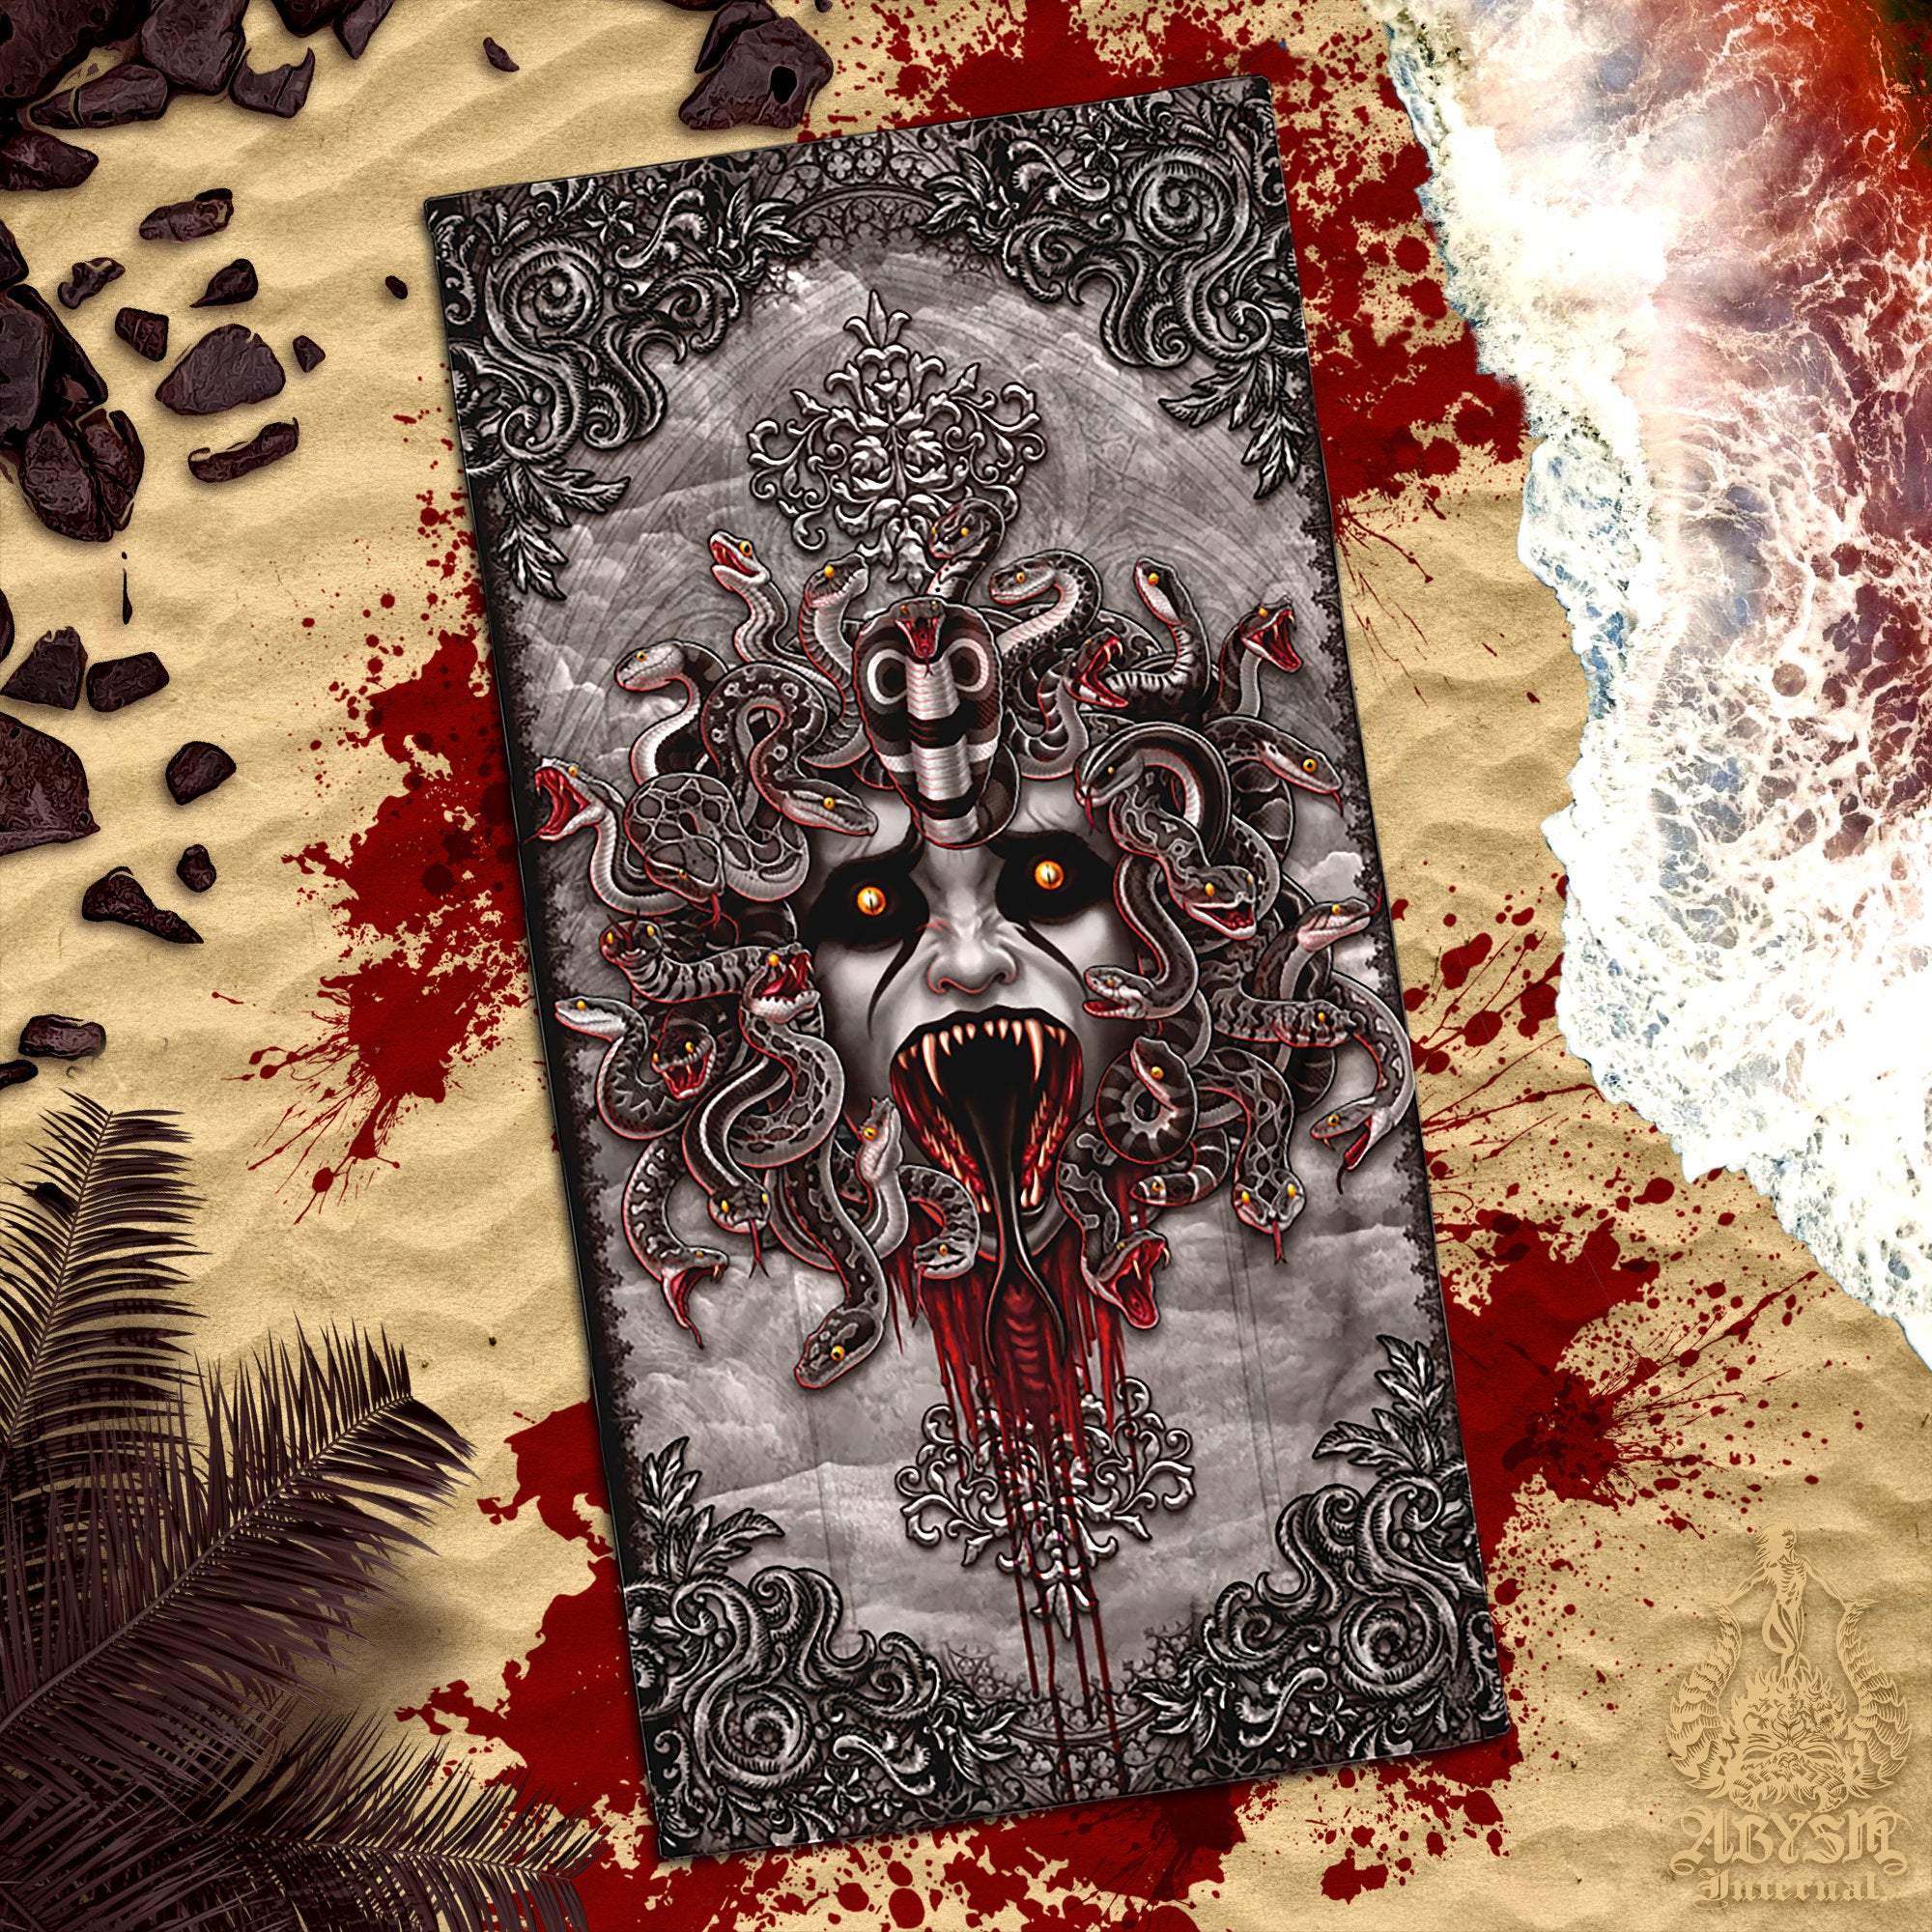 Horror Beach Towel, Gothic Medusa, Cool Gift Idea for Gamer, Goth Art, Snakes - Grunge, Grey - Abysm Internal